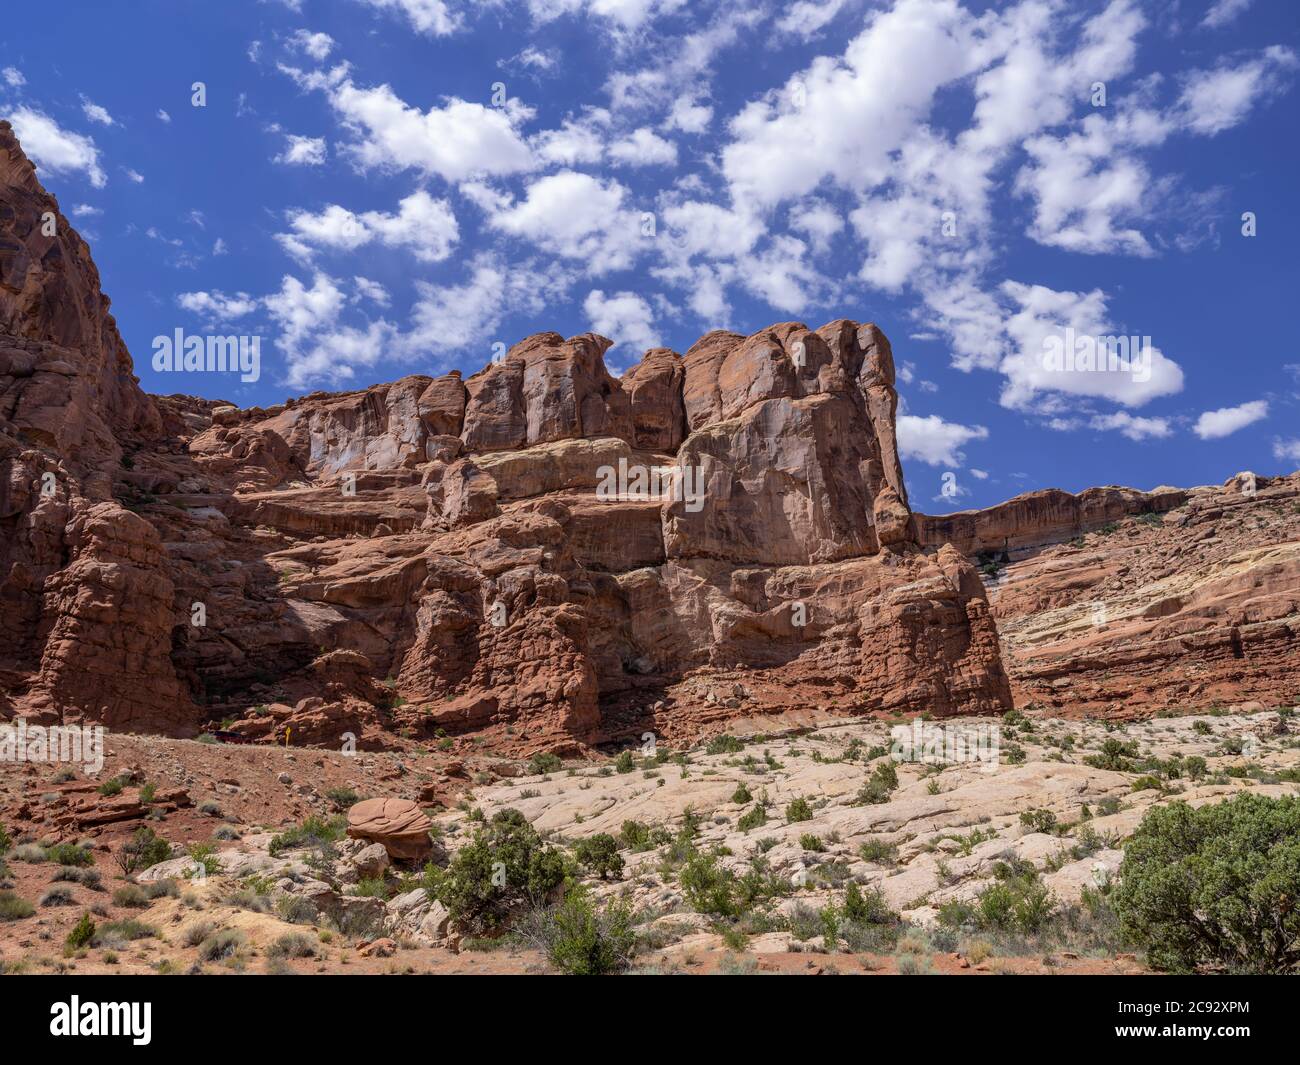 Rock formations in Utah desert, USA Stock Photo